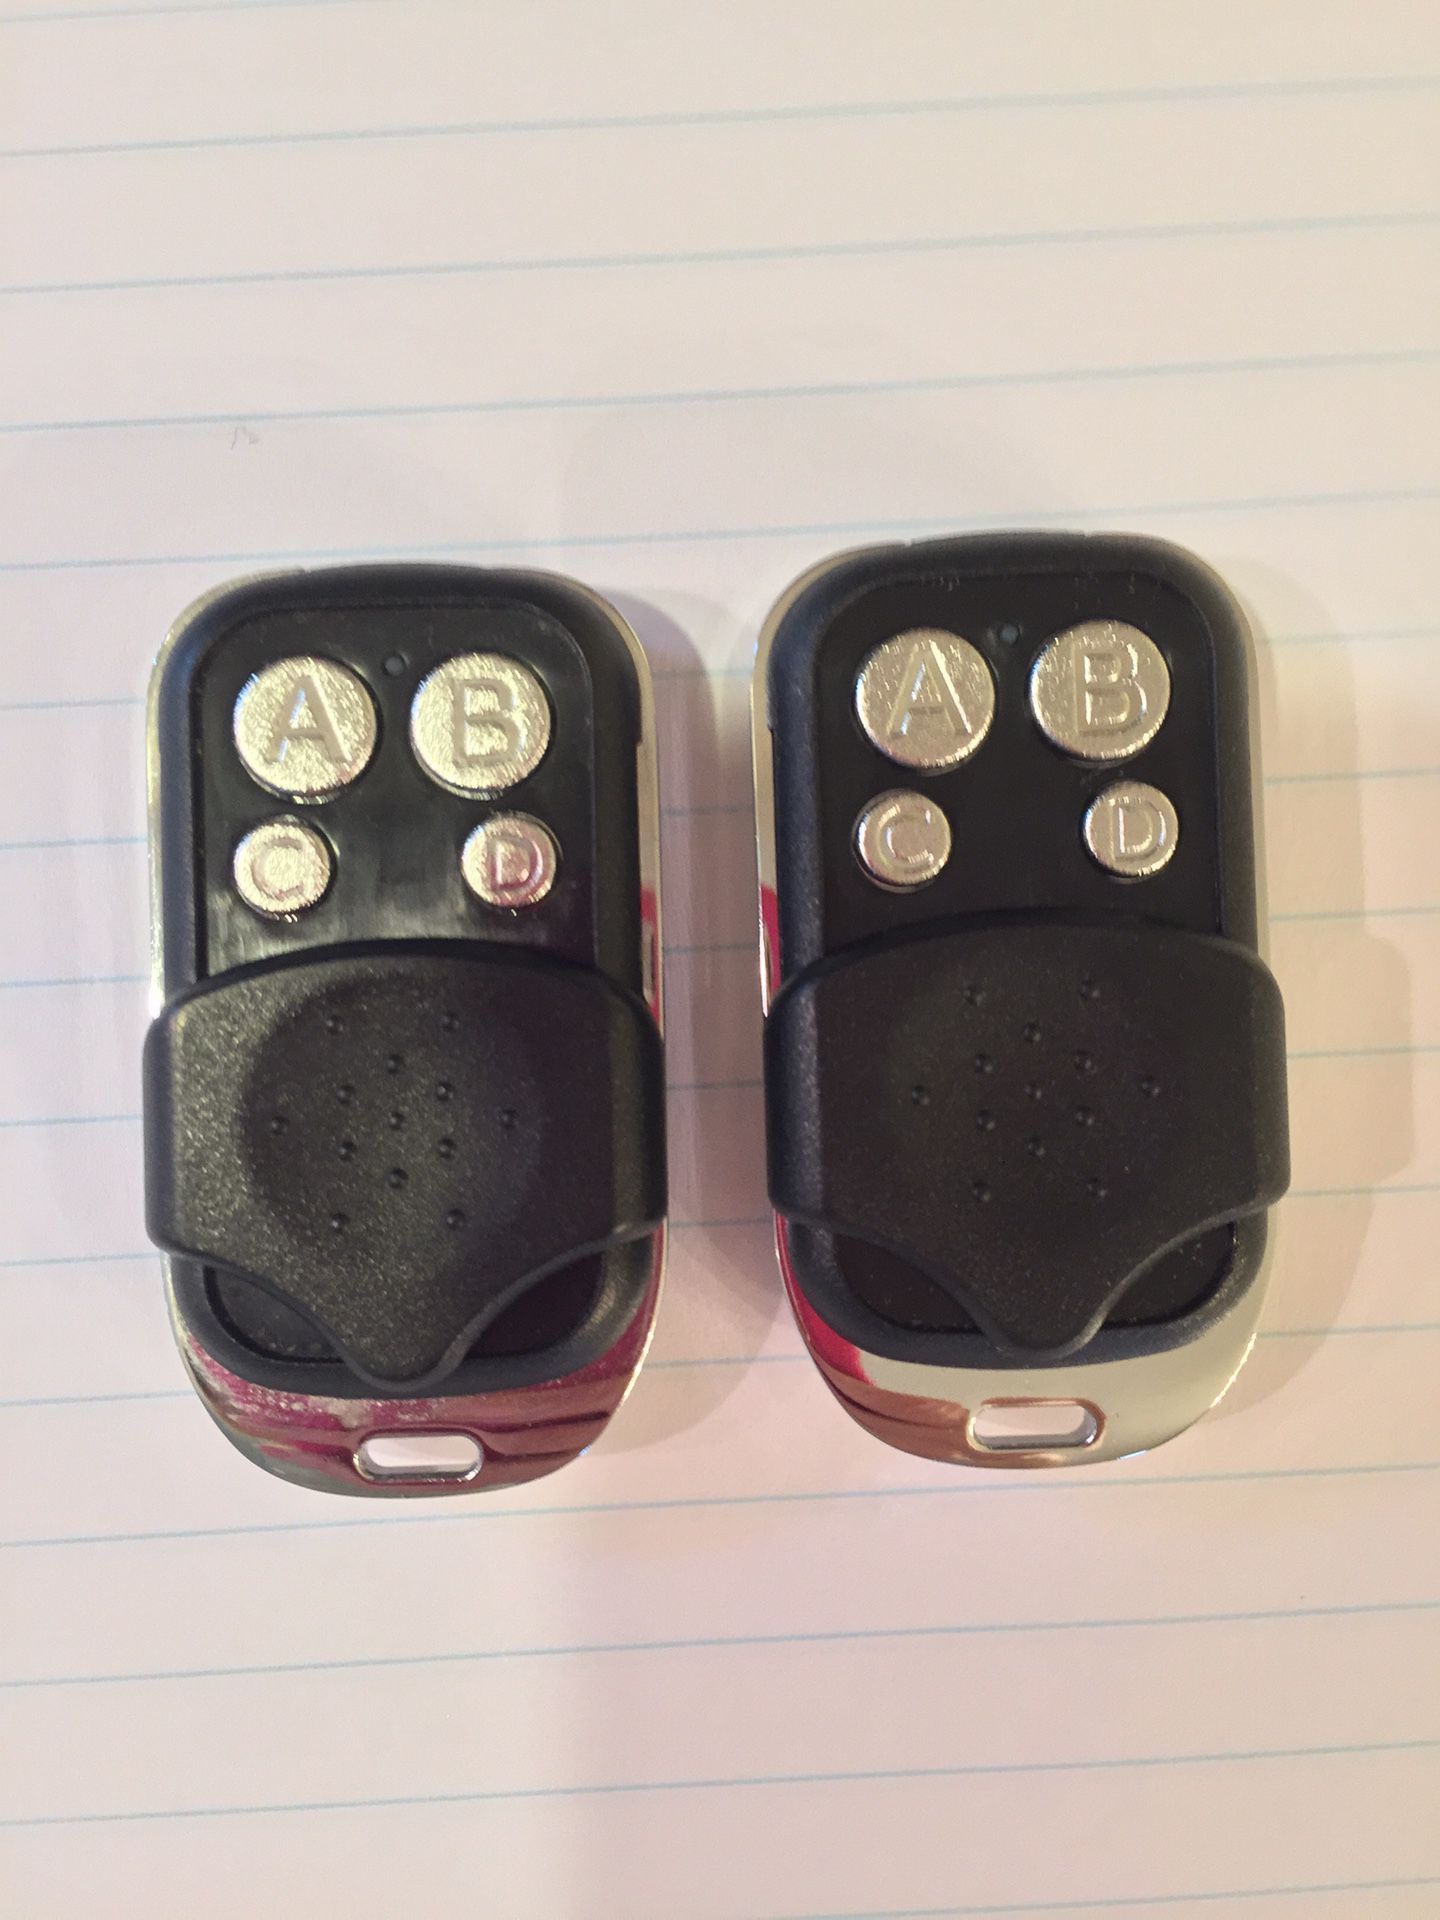 NEW: Pair of garage door opener remote controls keychain fobs- Genie compatible